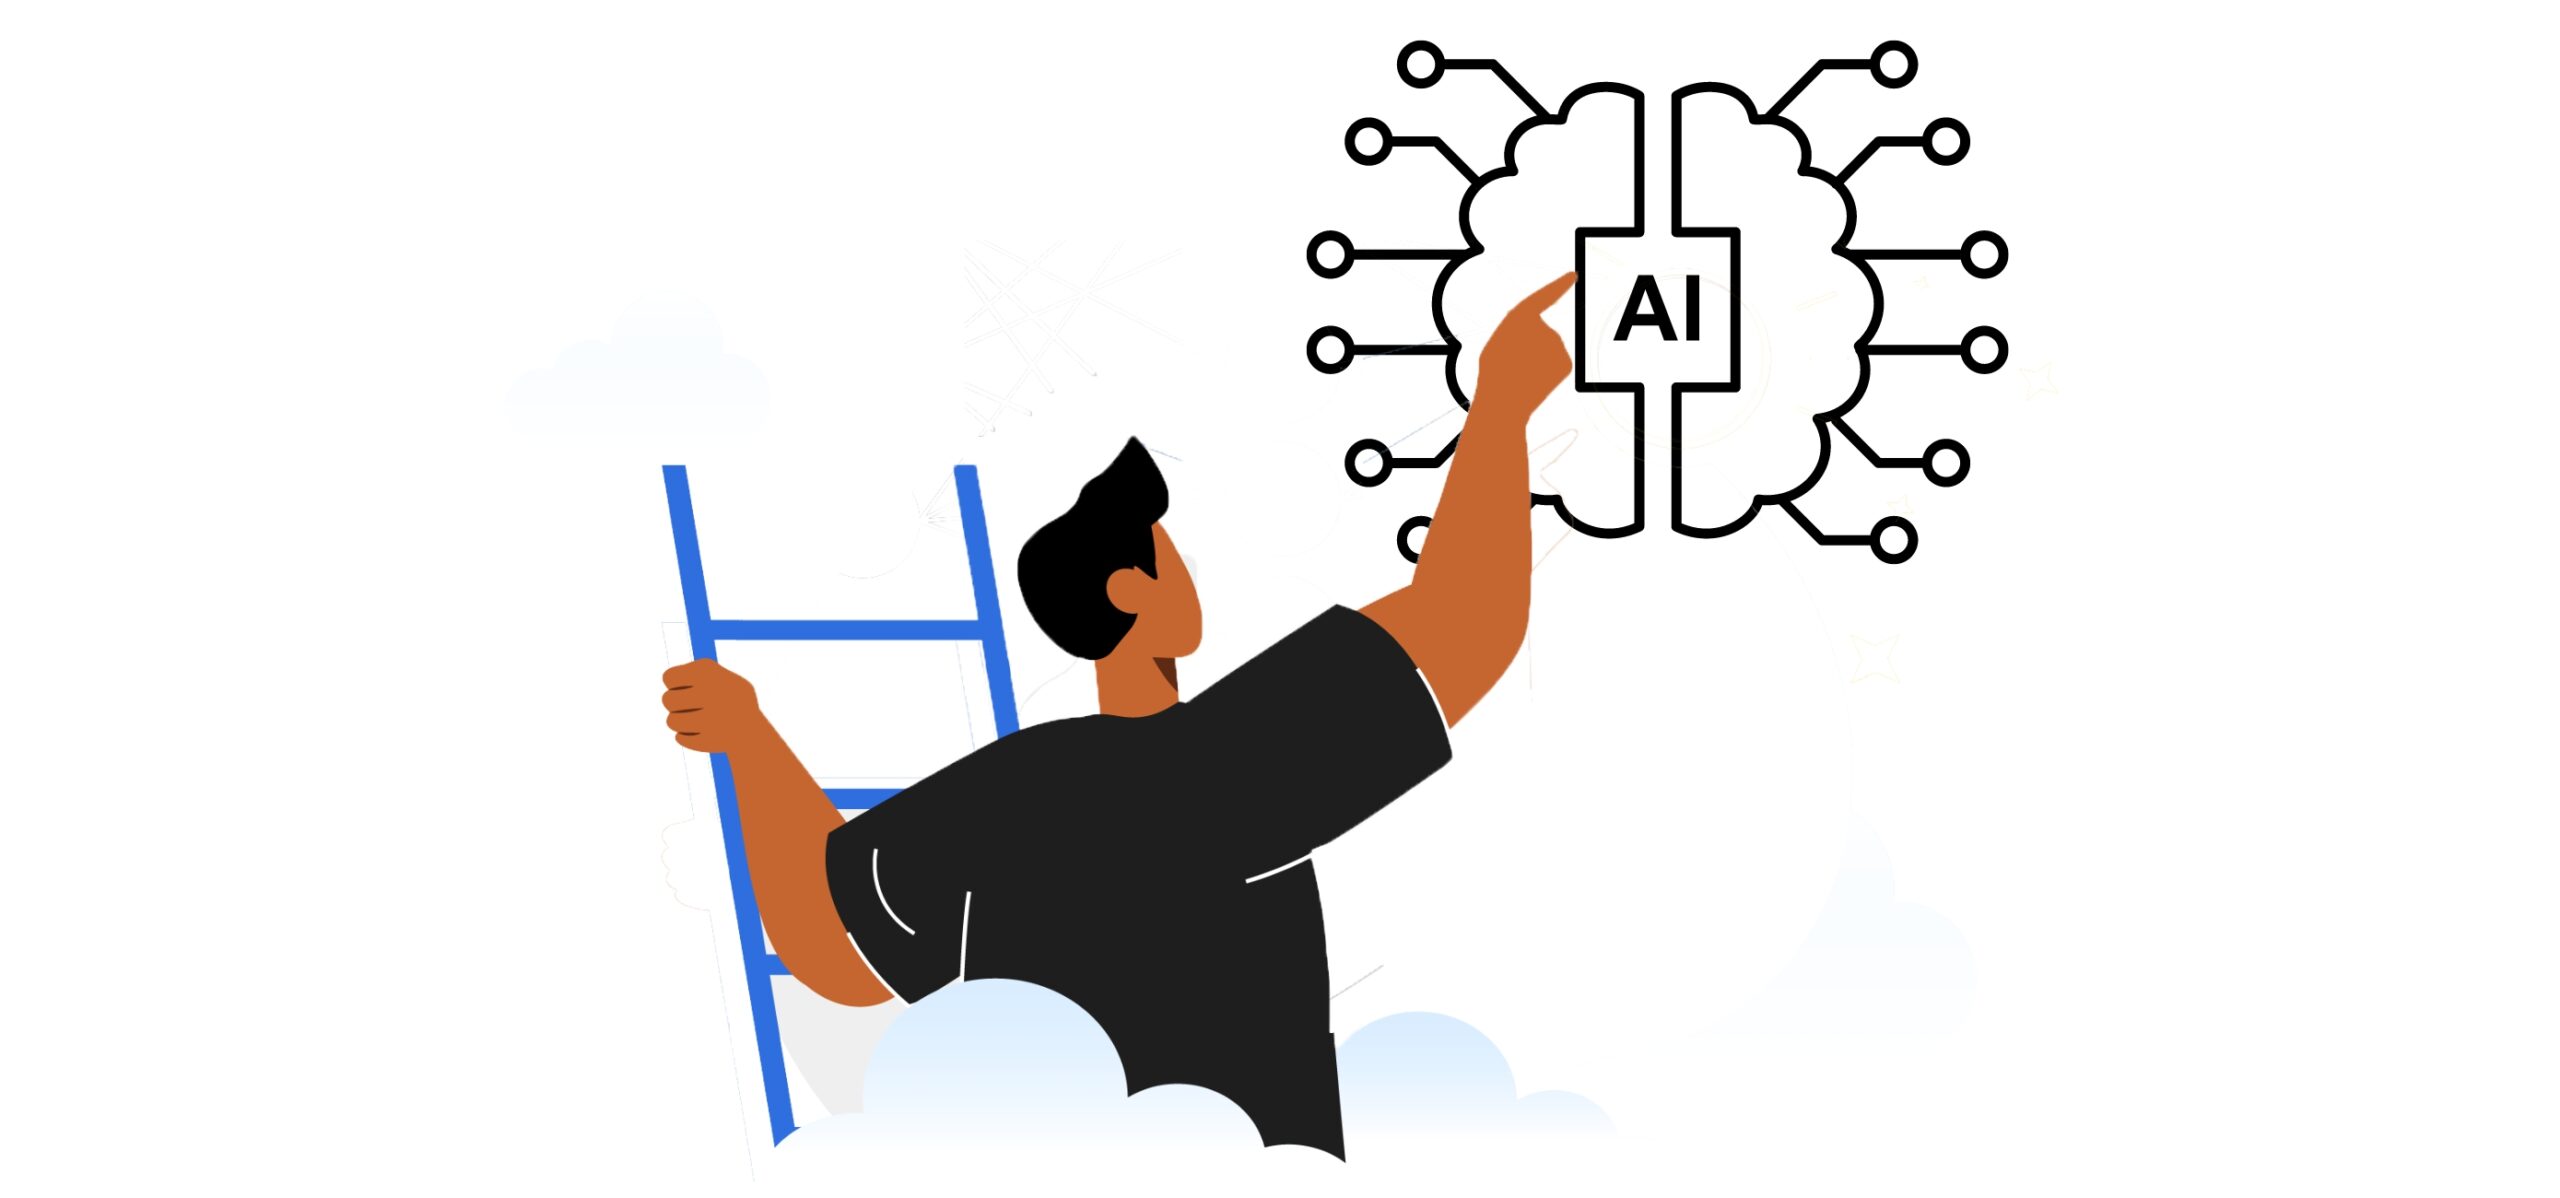 Building Responsible AI - The Human Way!